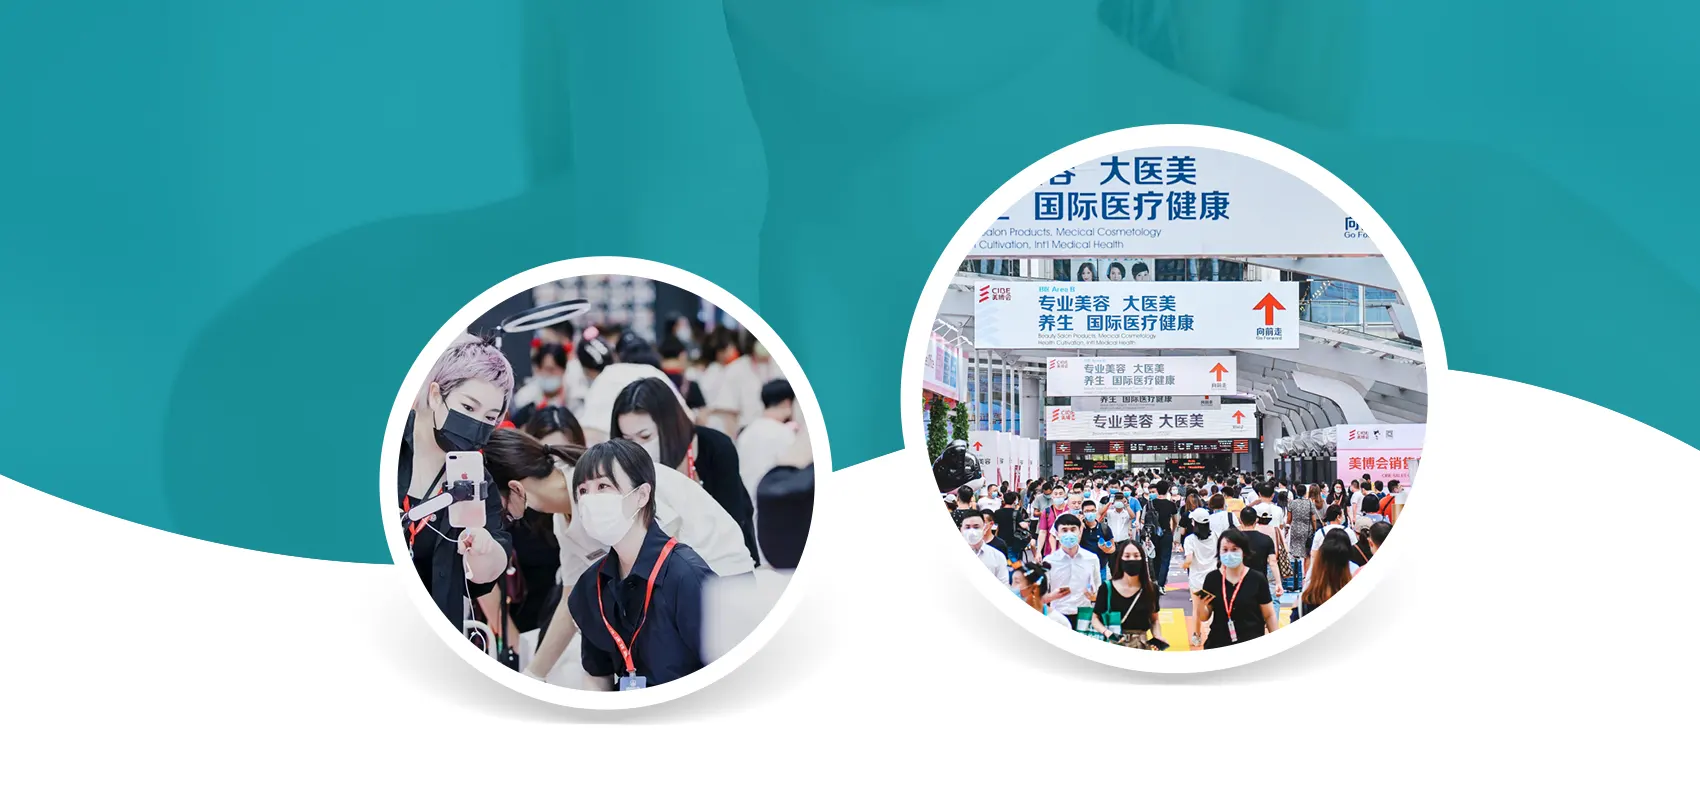 Guangzhou Schoonheidstentoonstelling in 2018